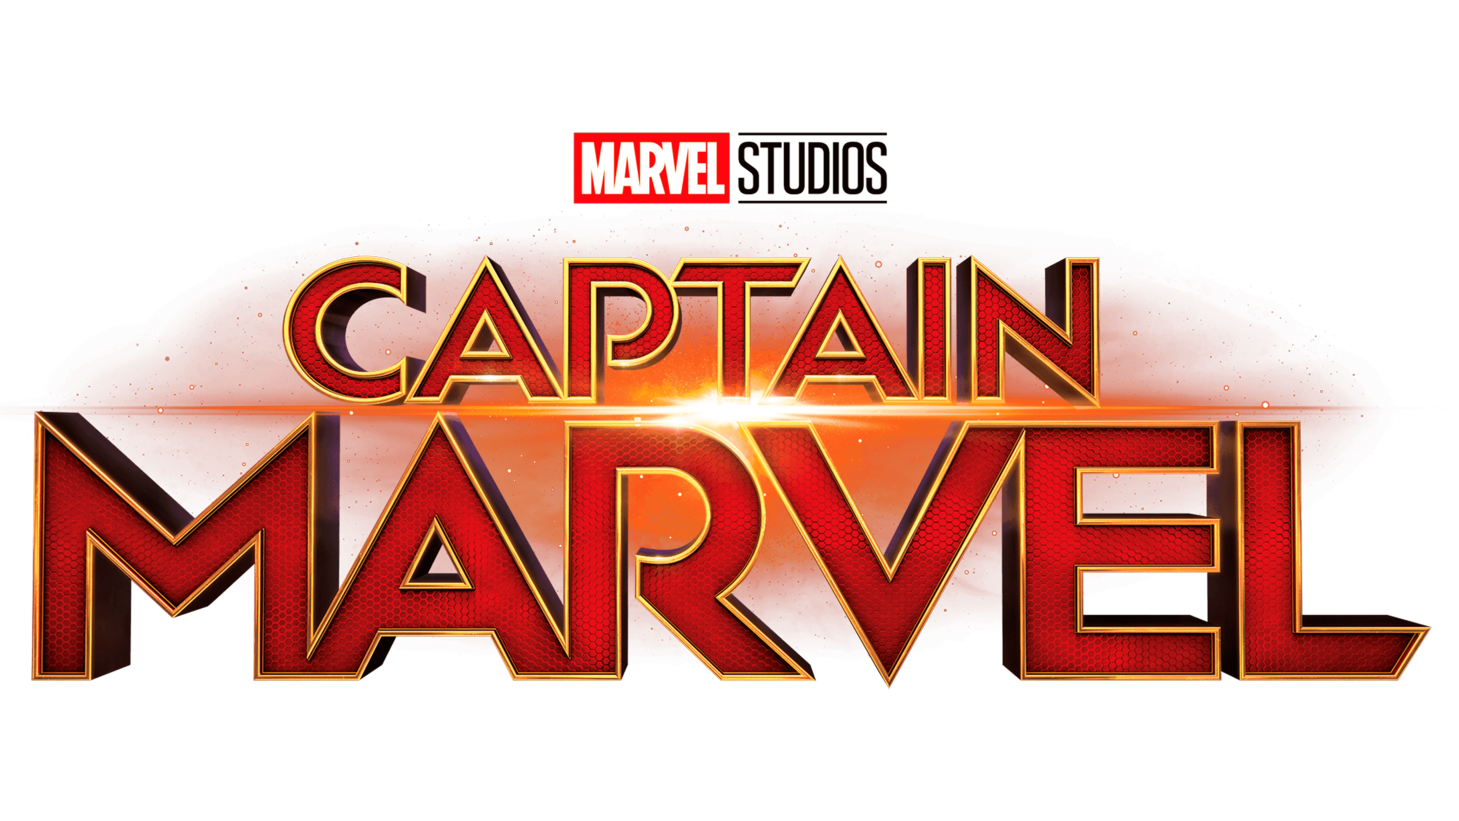 Captain marvel sign